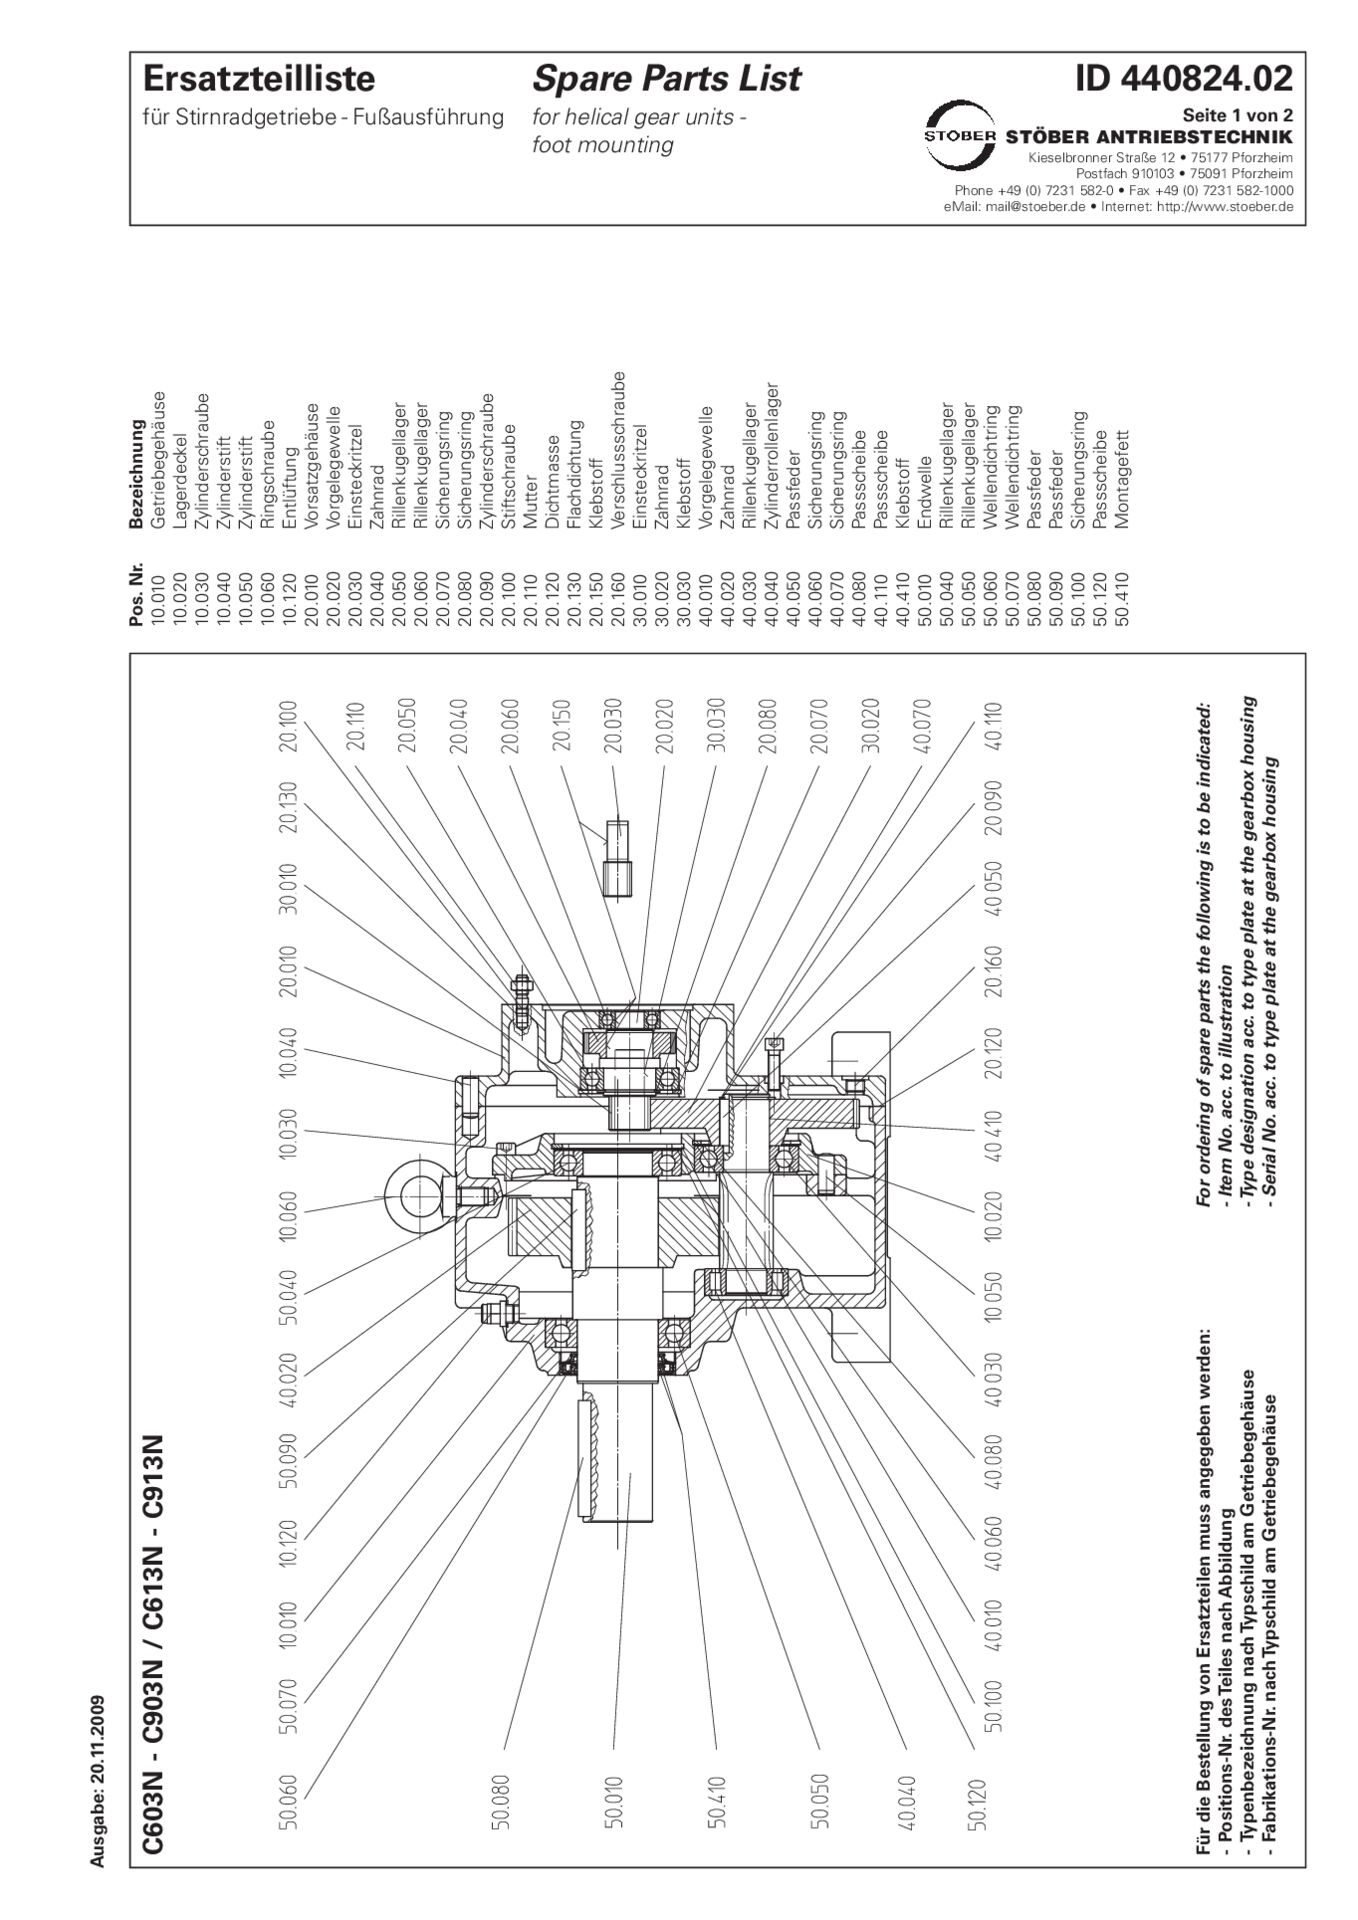 Replacement parts list helical gear units C603 C613 C703 C713 C803 C813 C903 C913 NErsatzteilliste Stirnradgetriebe C603 C613 C703 C713 C803 C813 C903 C913 N